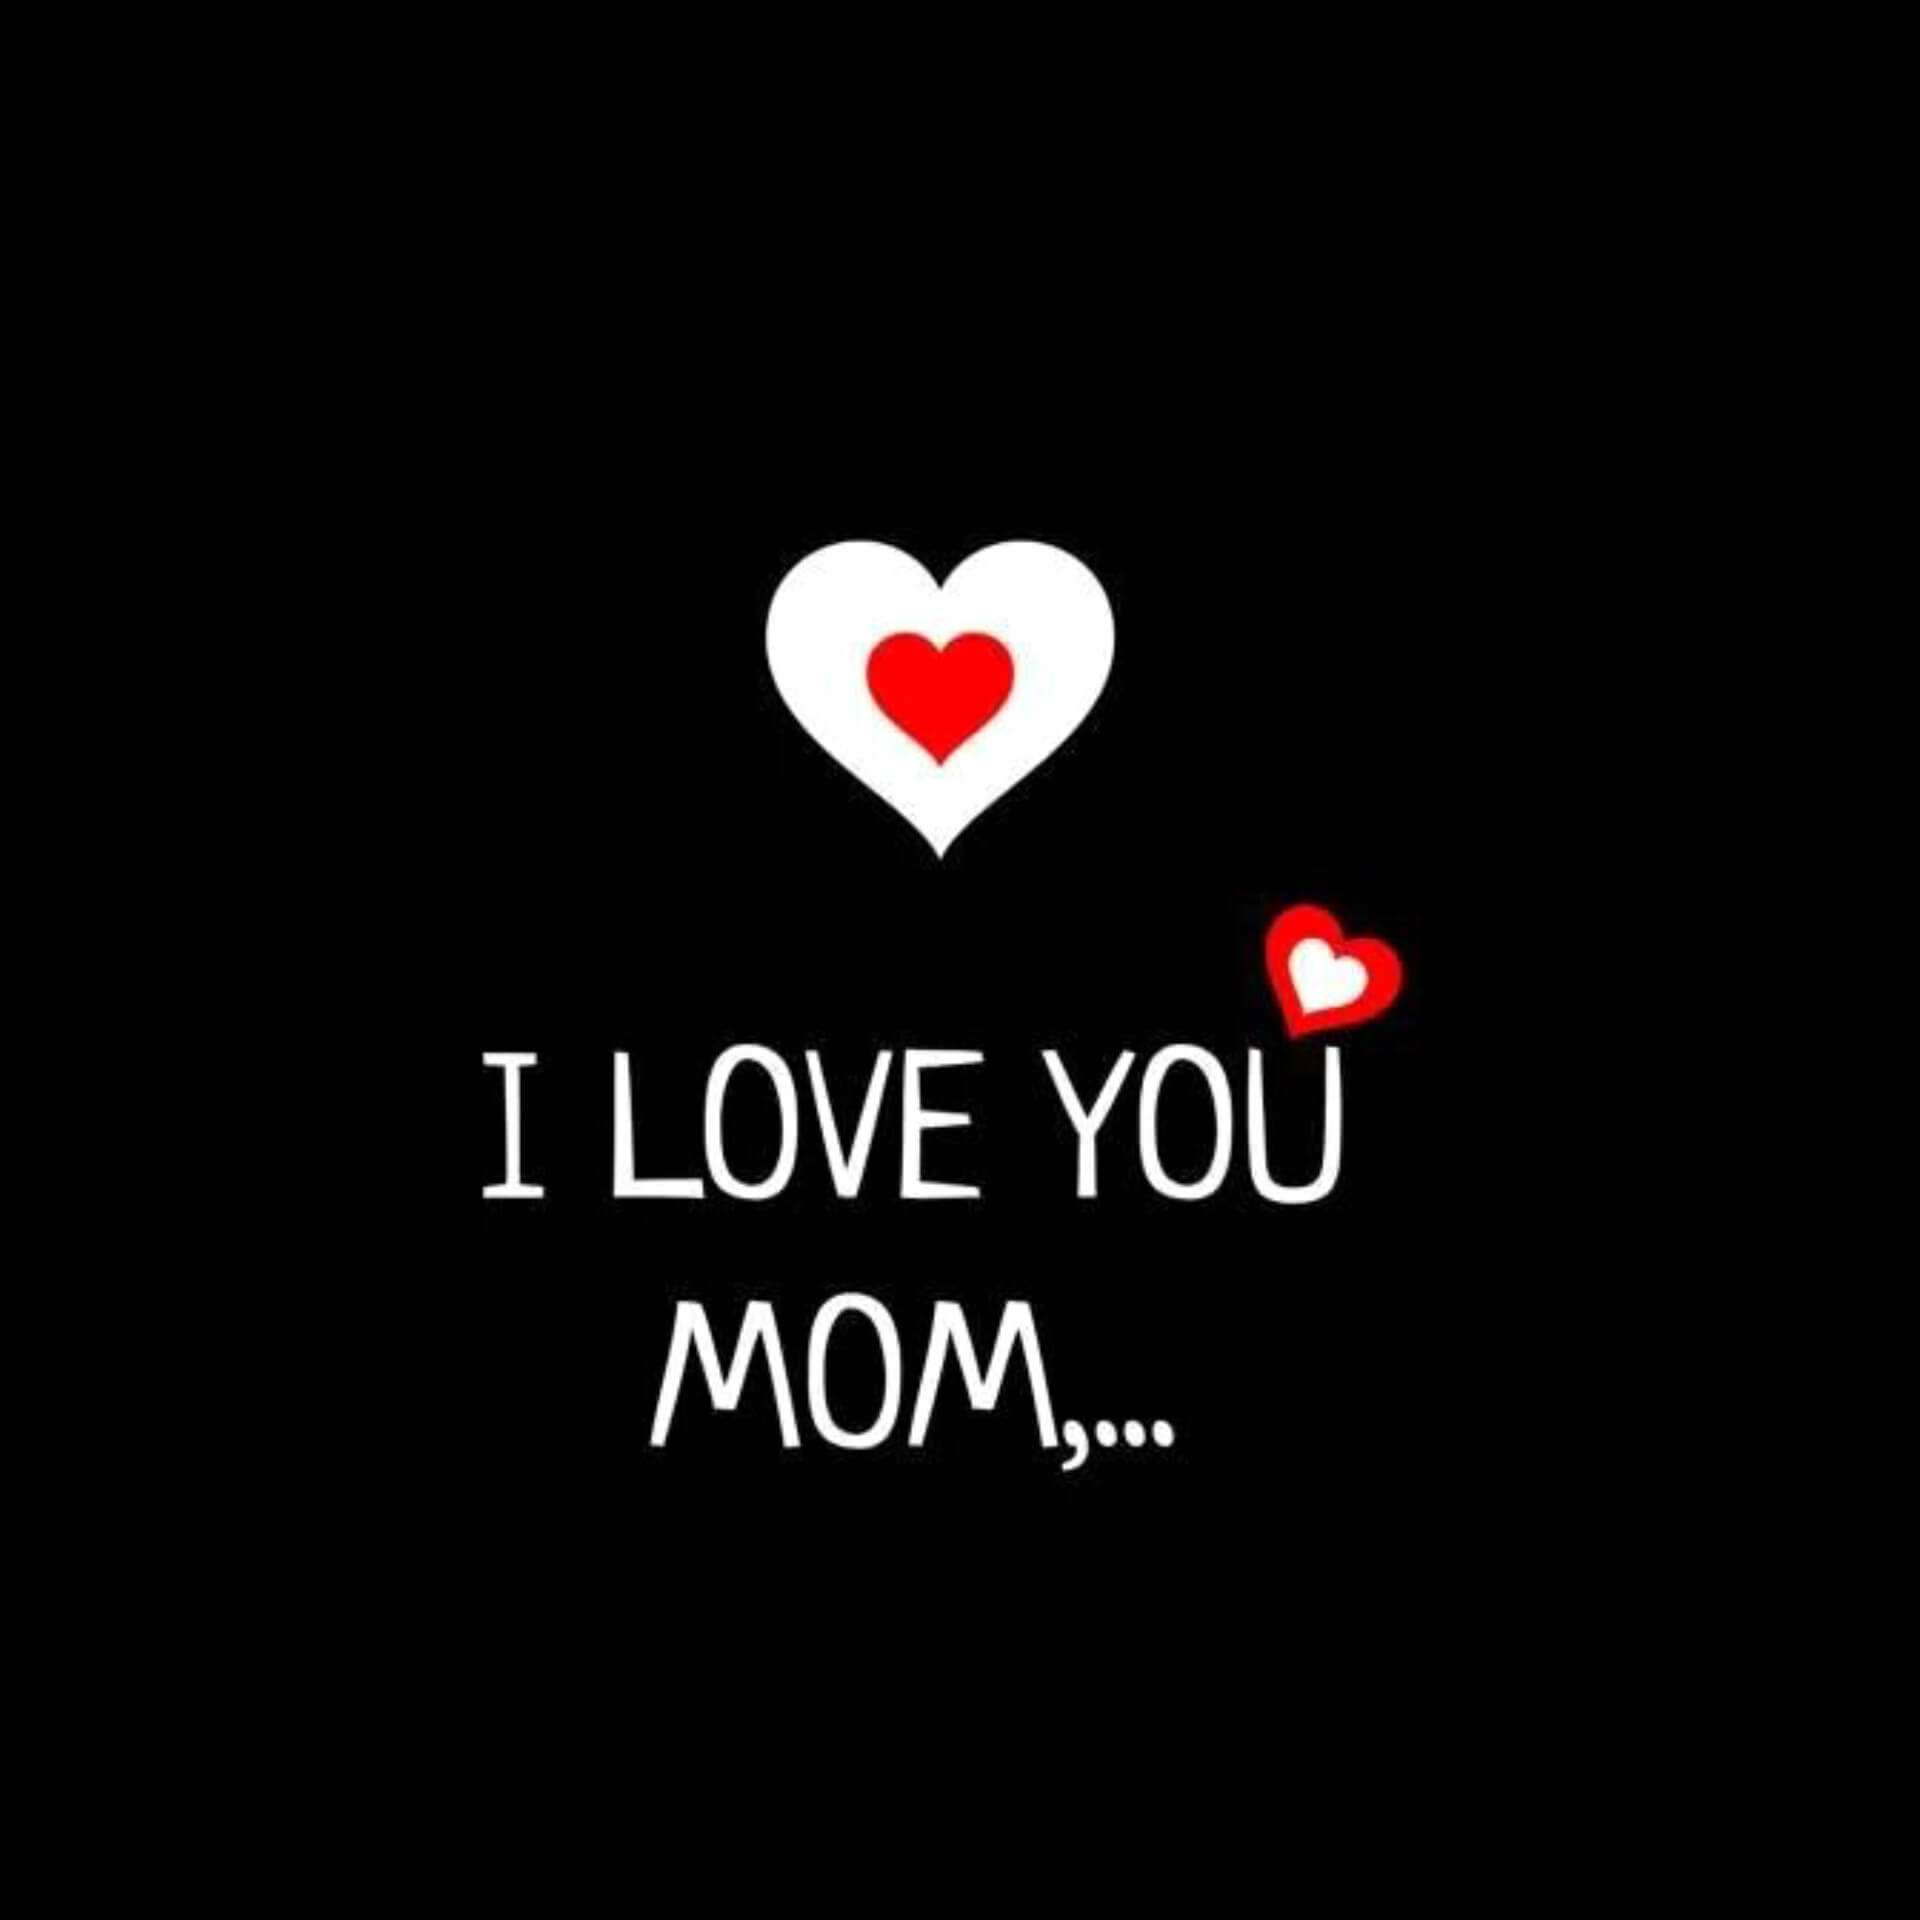 I Love you mom, WhatsApp Dp